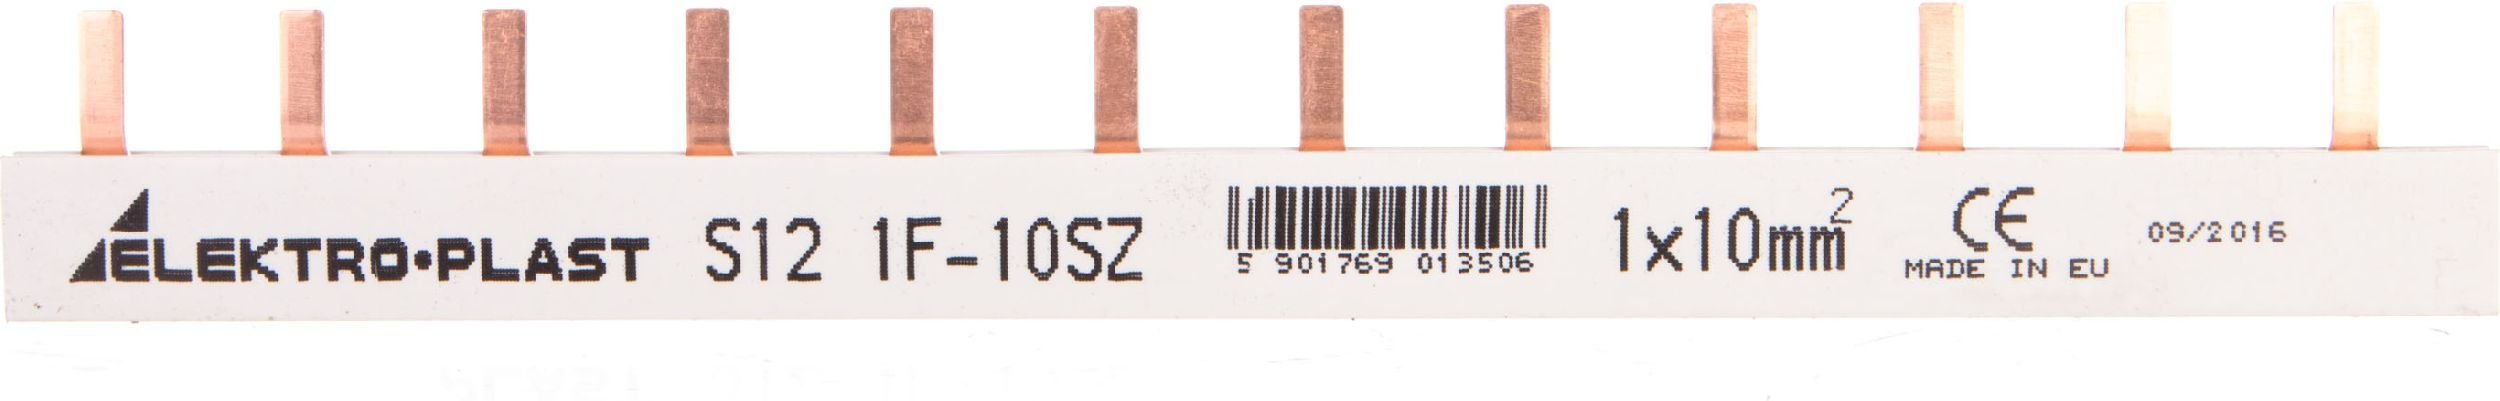 Conductor șină tip pin 1P 16mm2 100A pini 12 IZS16 / 1F / 12 (45236)